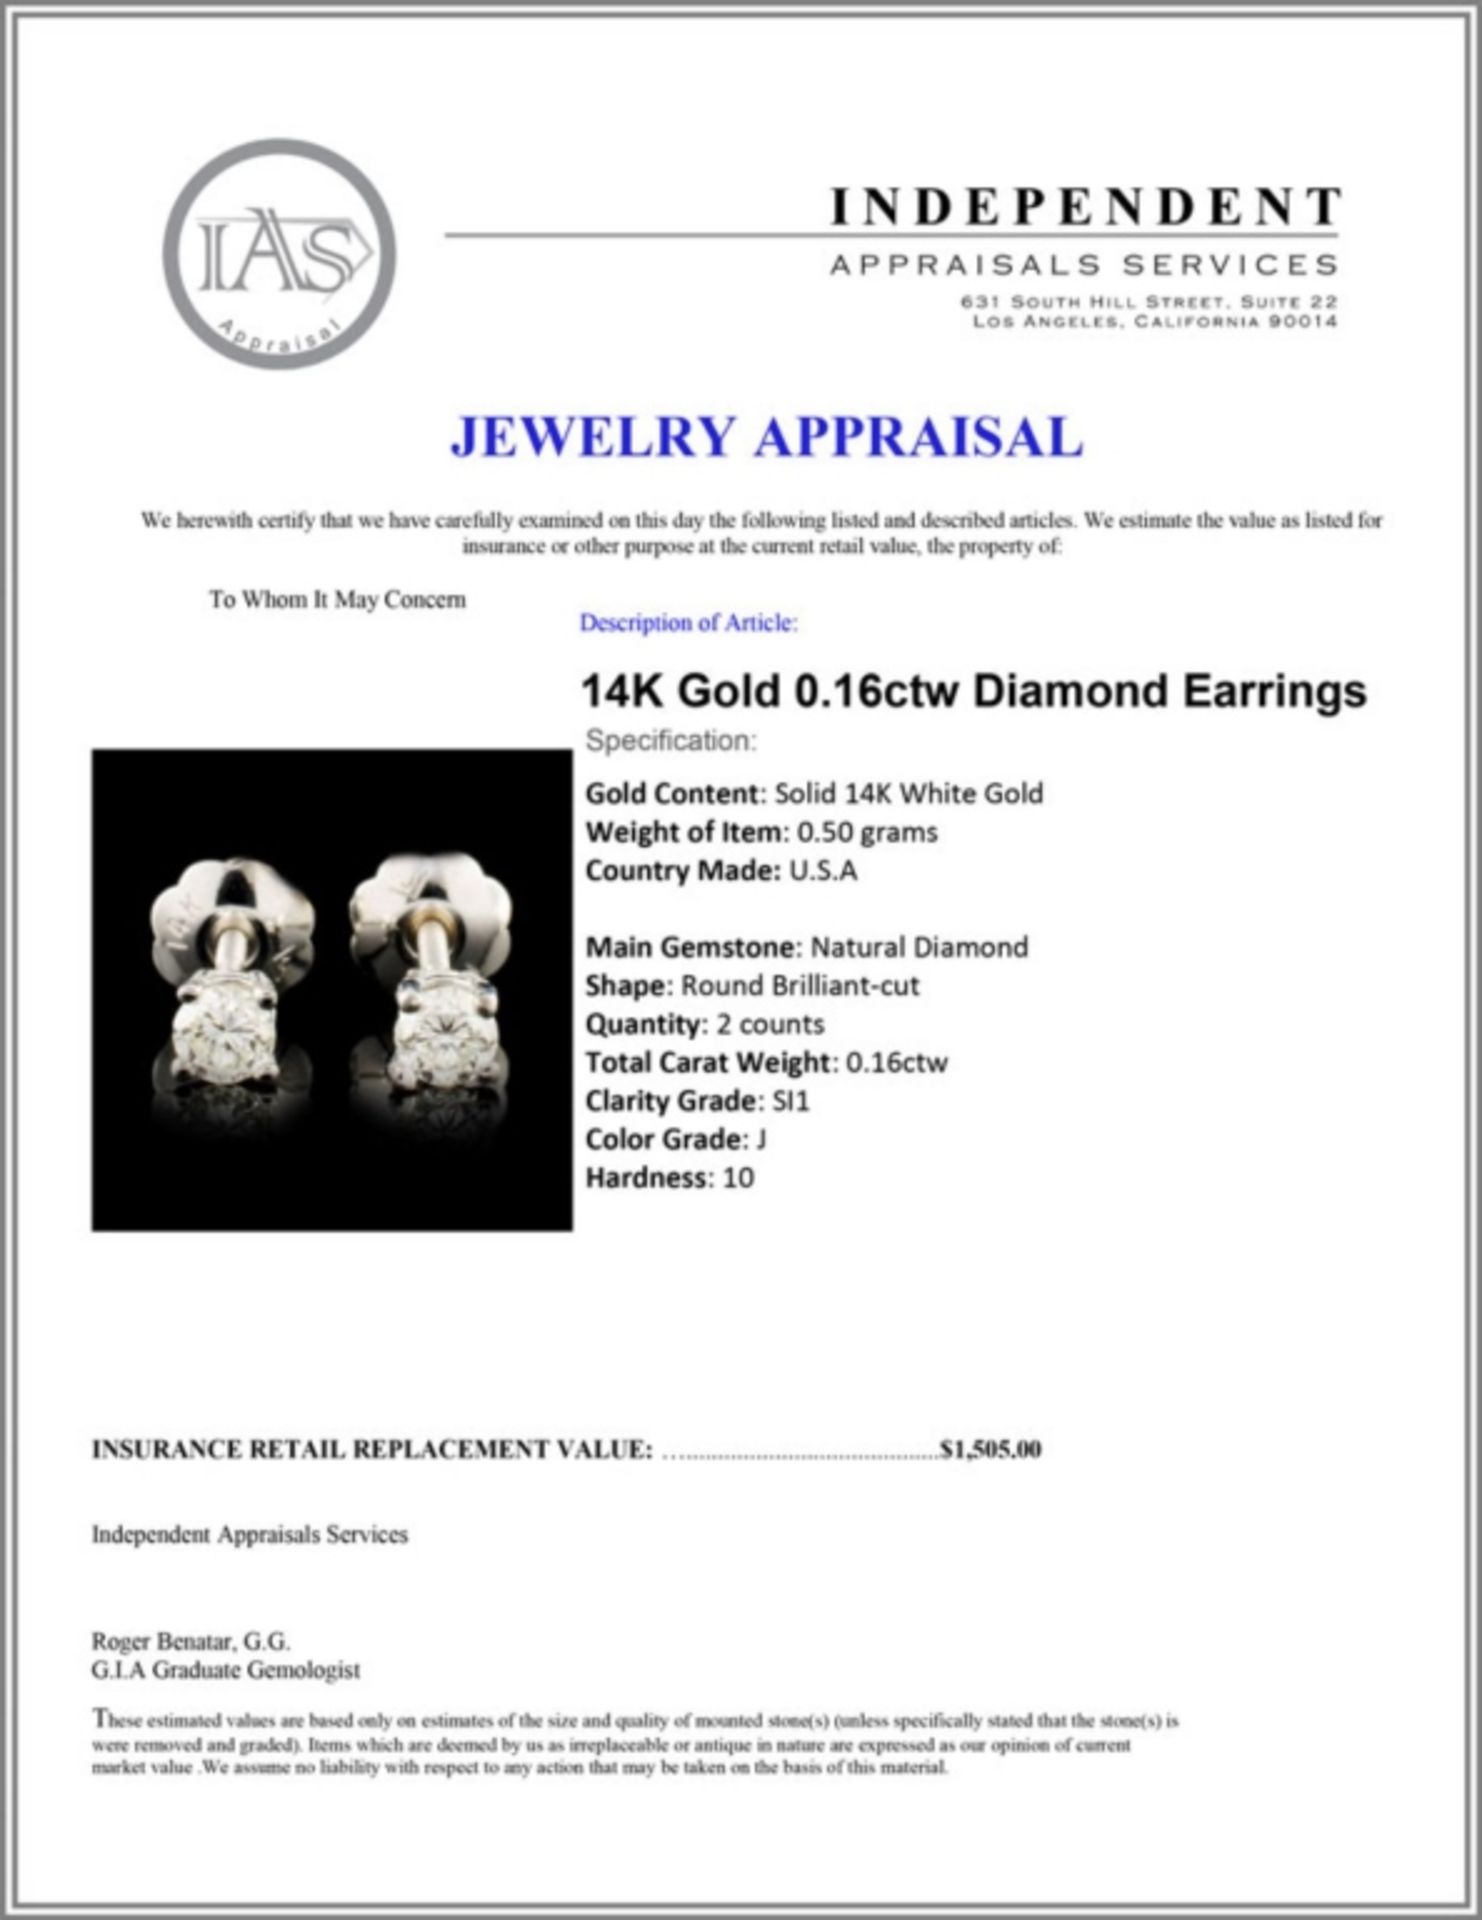 14K Gold 0.16ctw Diamond Earrings - Image 3 of 3